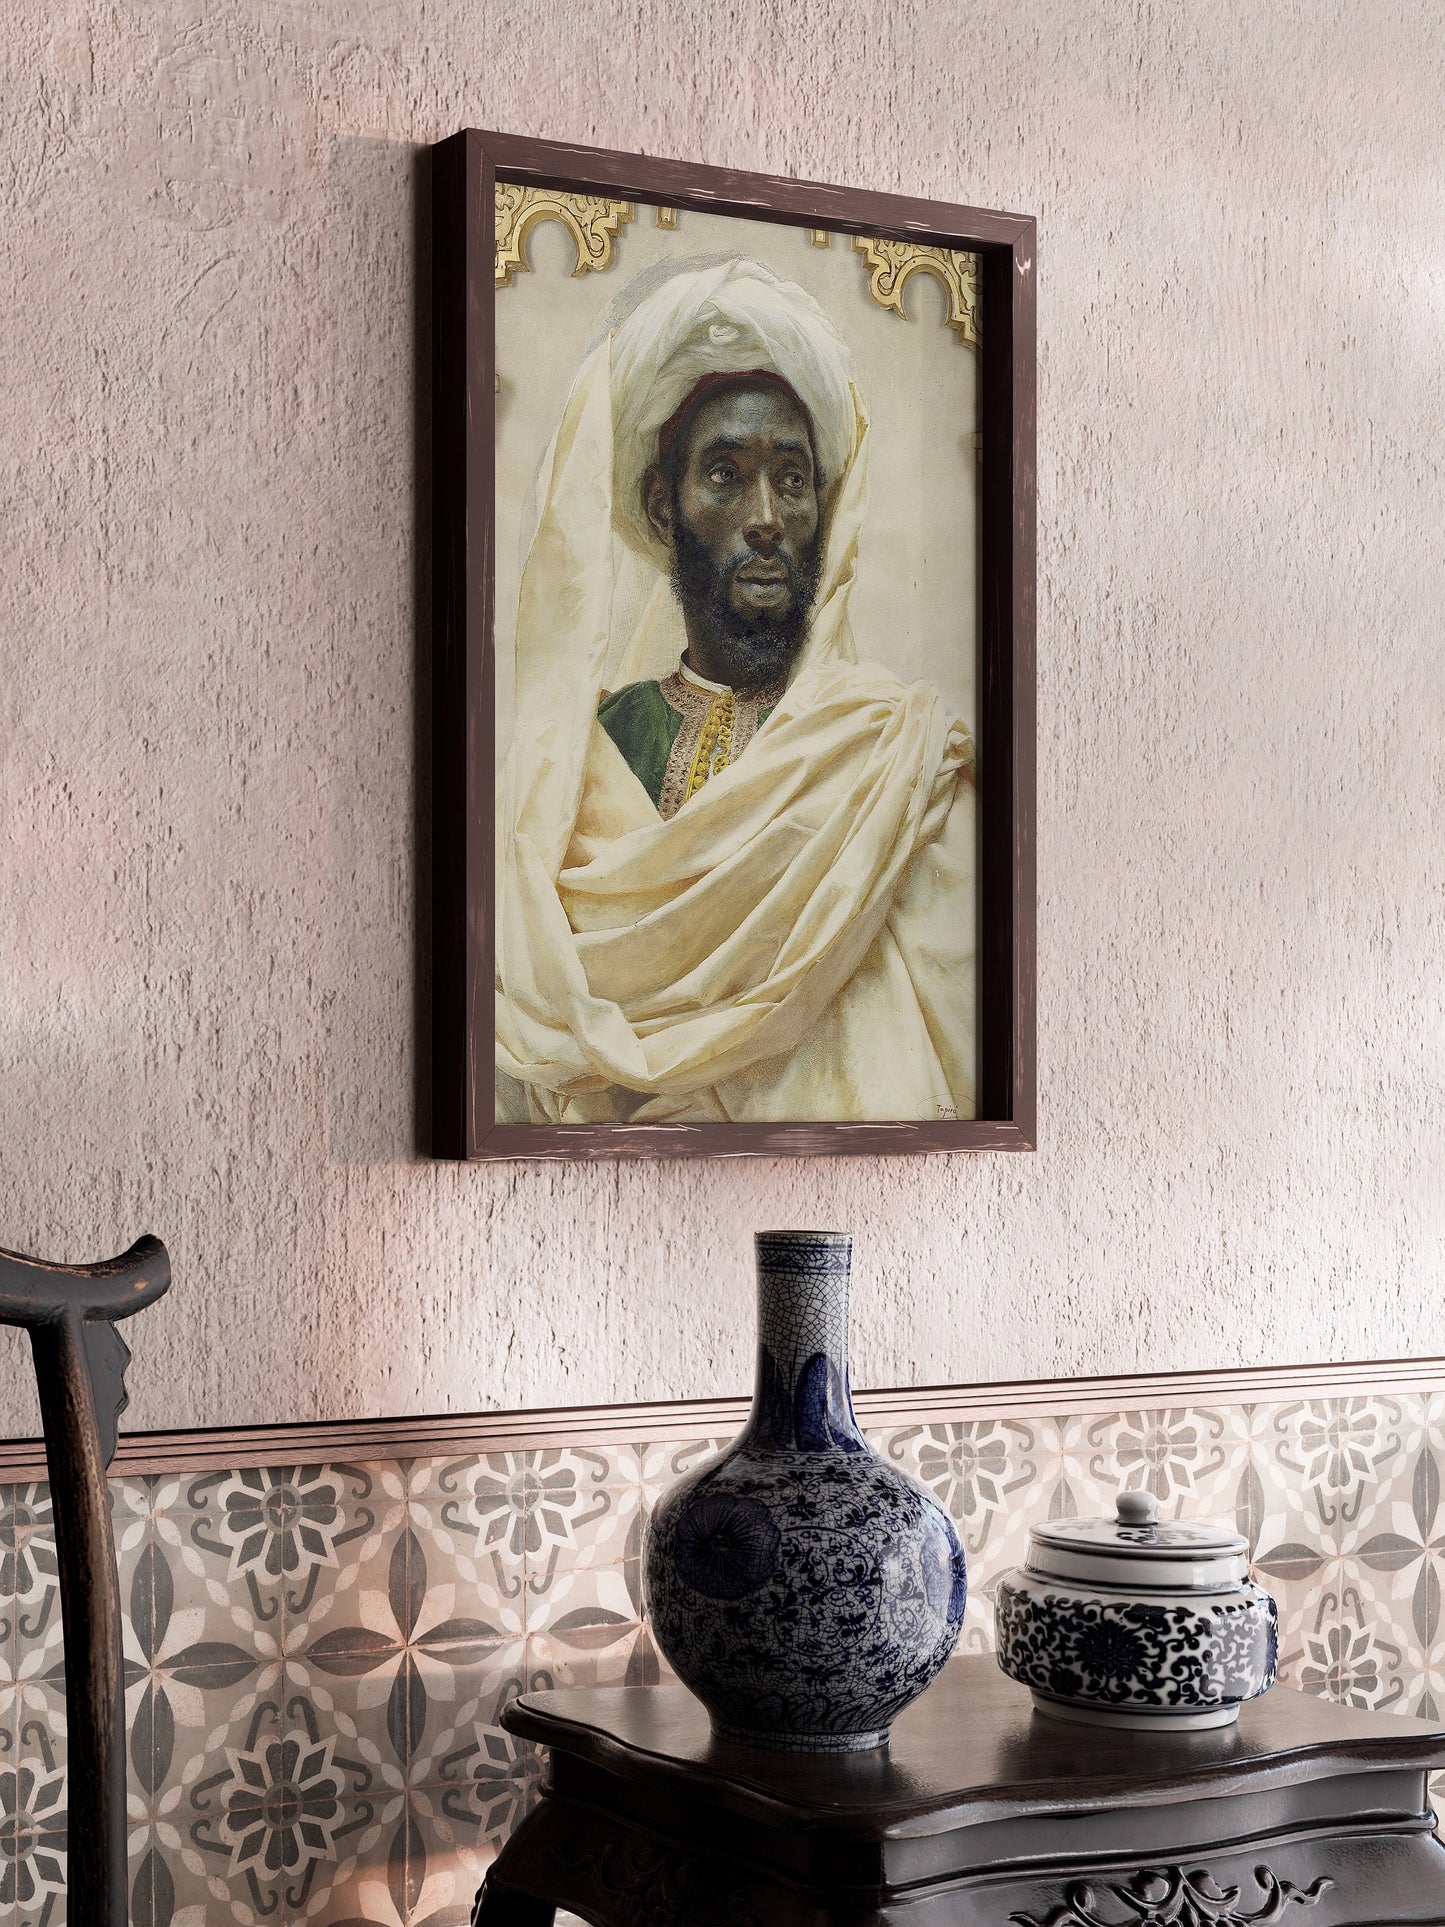 Josep Tapiró Baró Moorish Portrait Orientalist Fine Art Famous Iconic Painting Vintage Ready hang Framed Home Office Decor Print Gift Idea